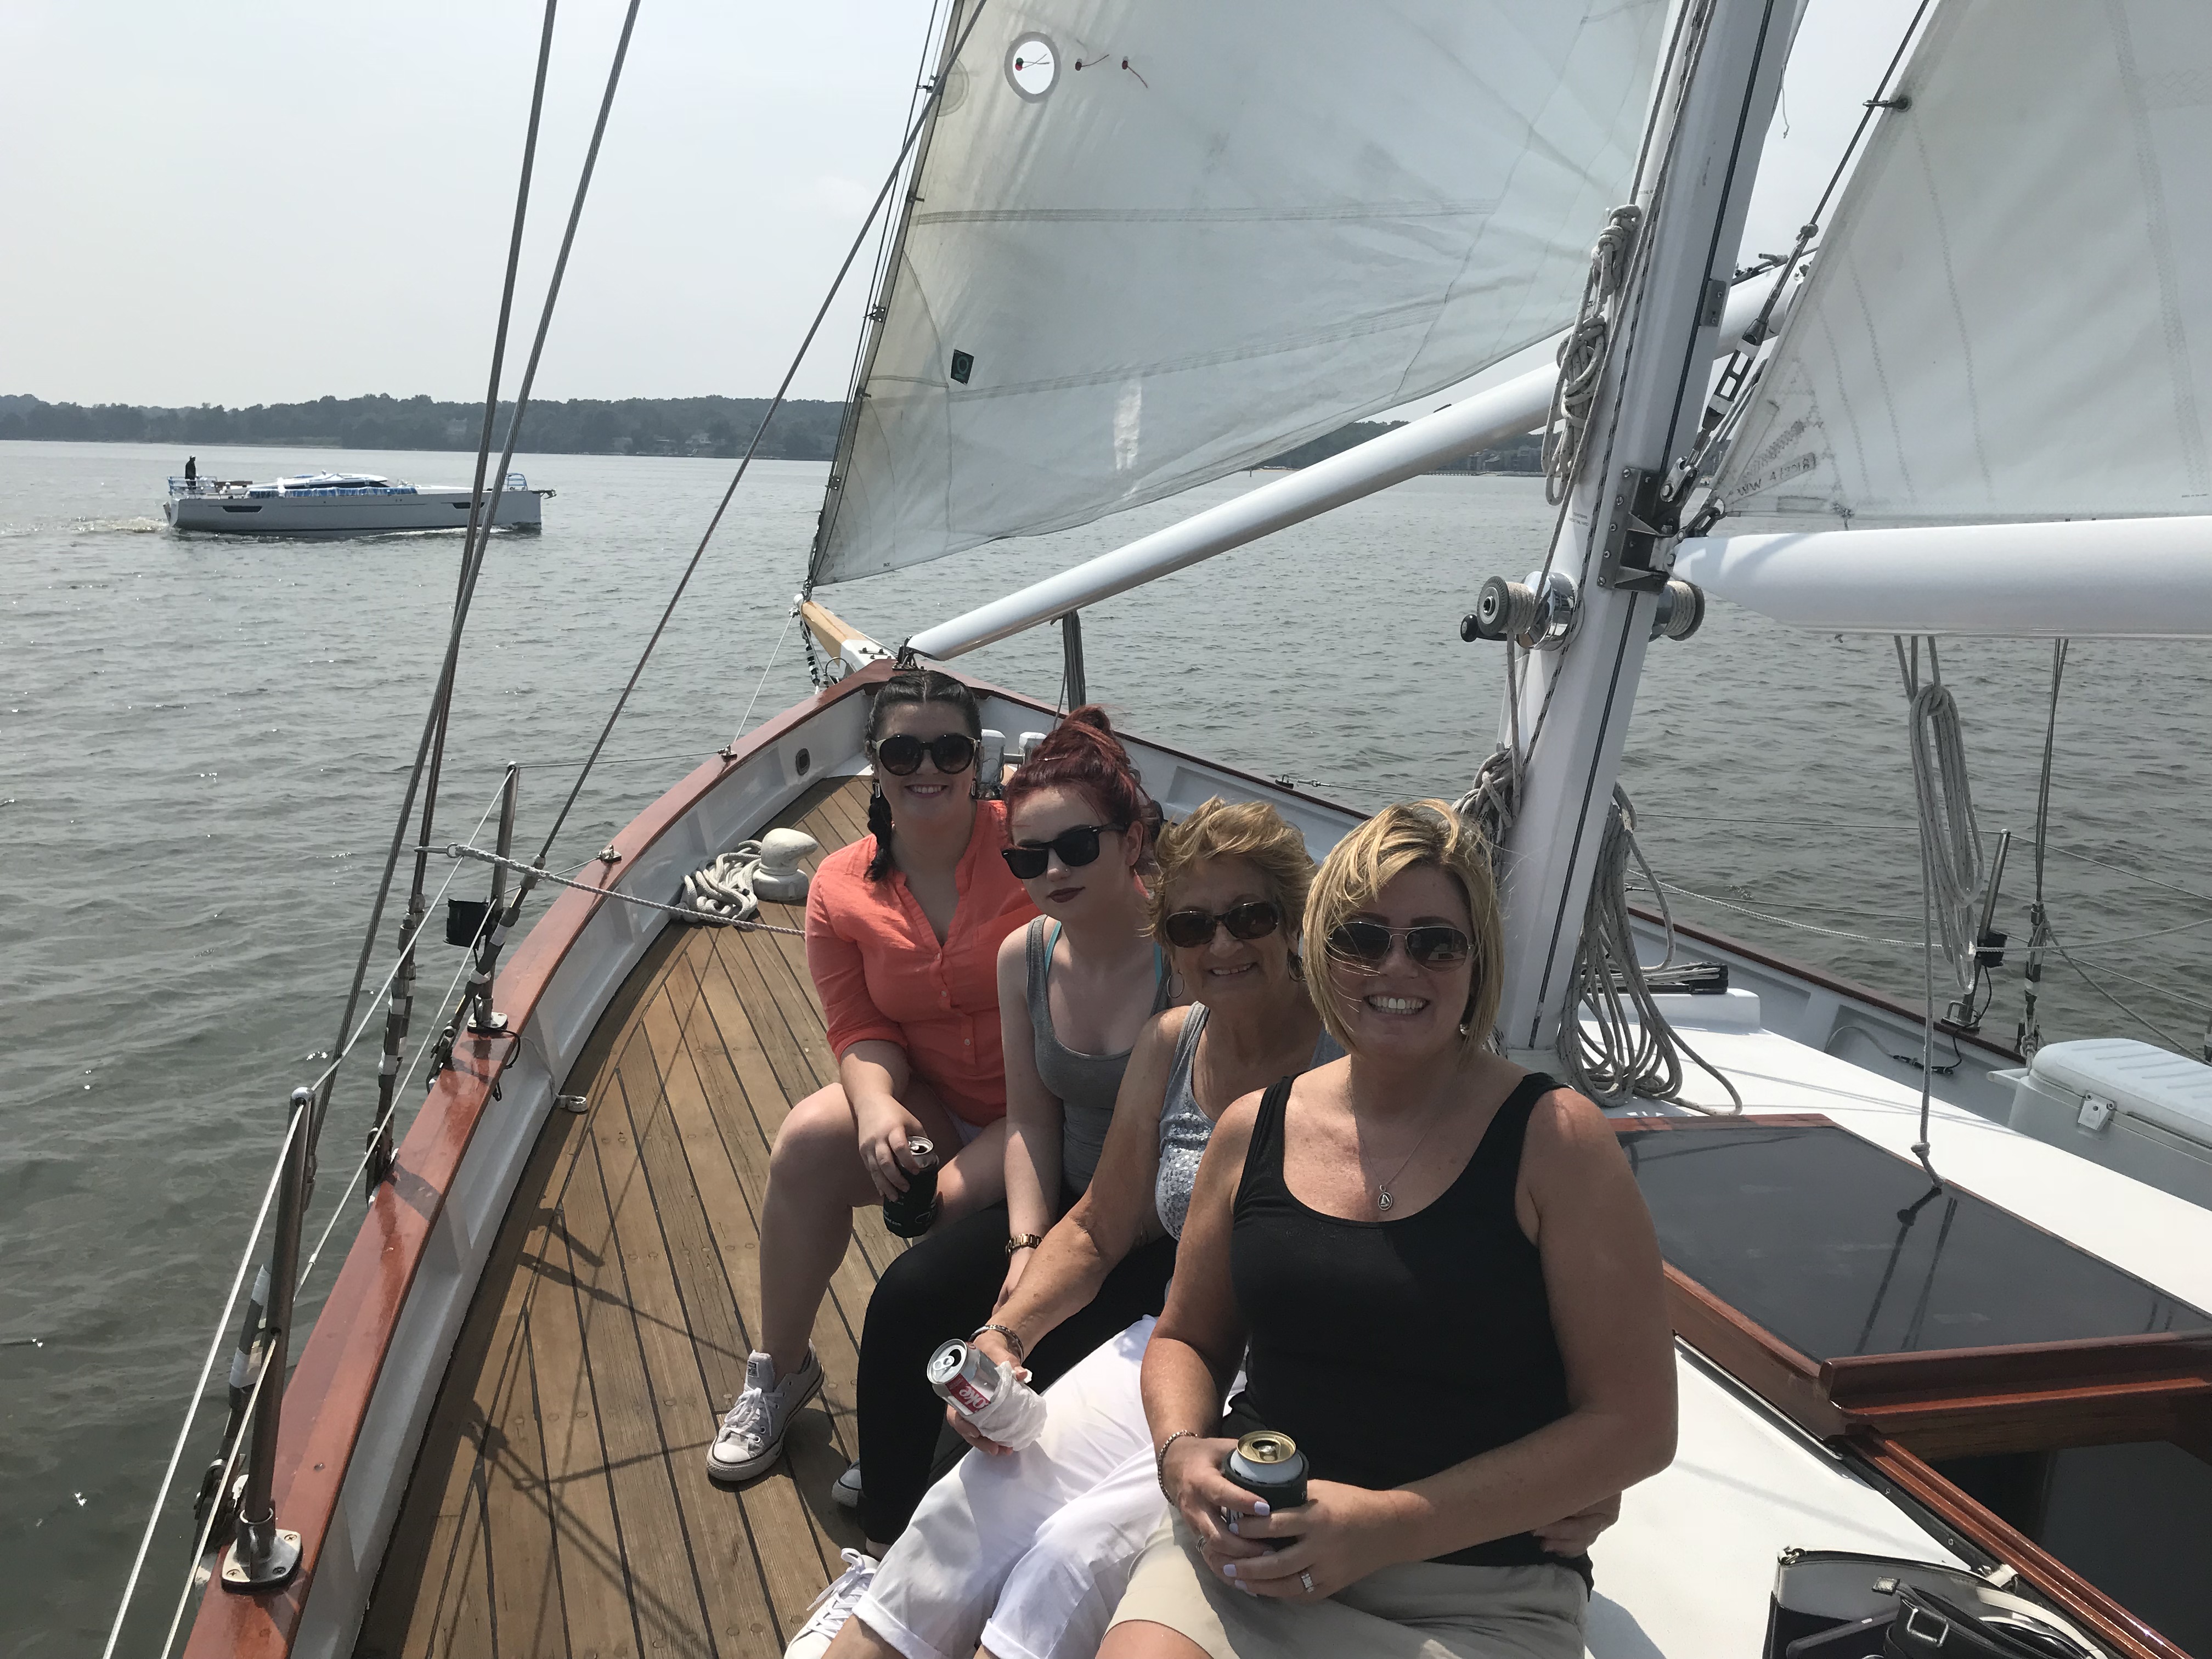 Four ladies all smiling and enjoying their sail